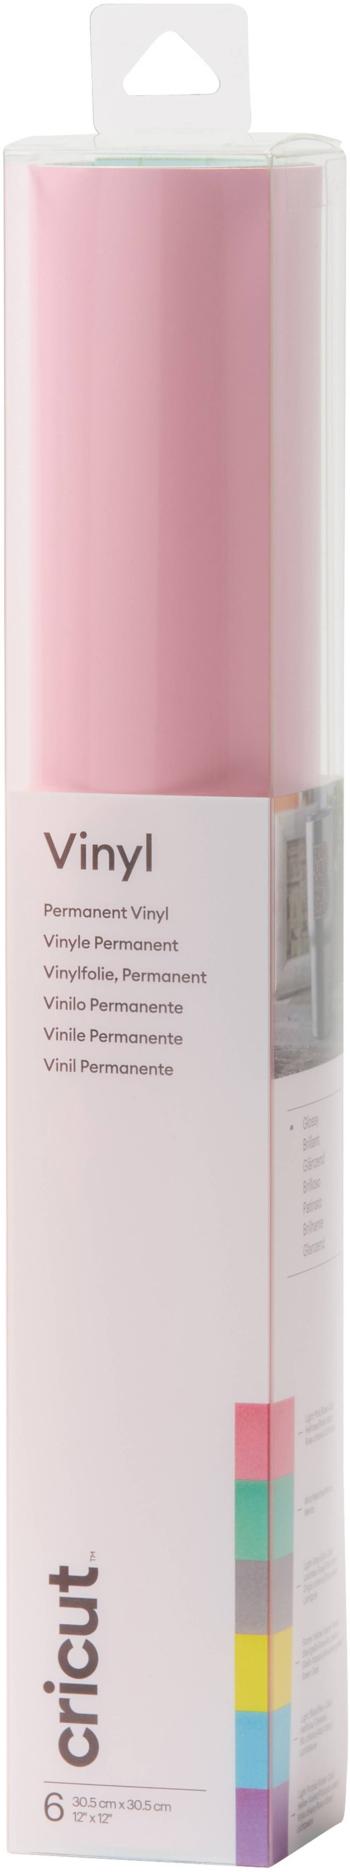 Cricut Premium Vinyl Permanent fólie  viacfarebná